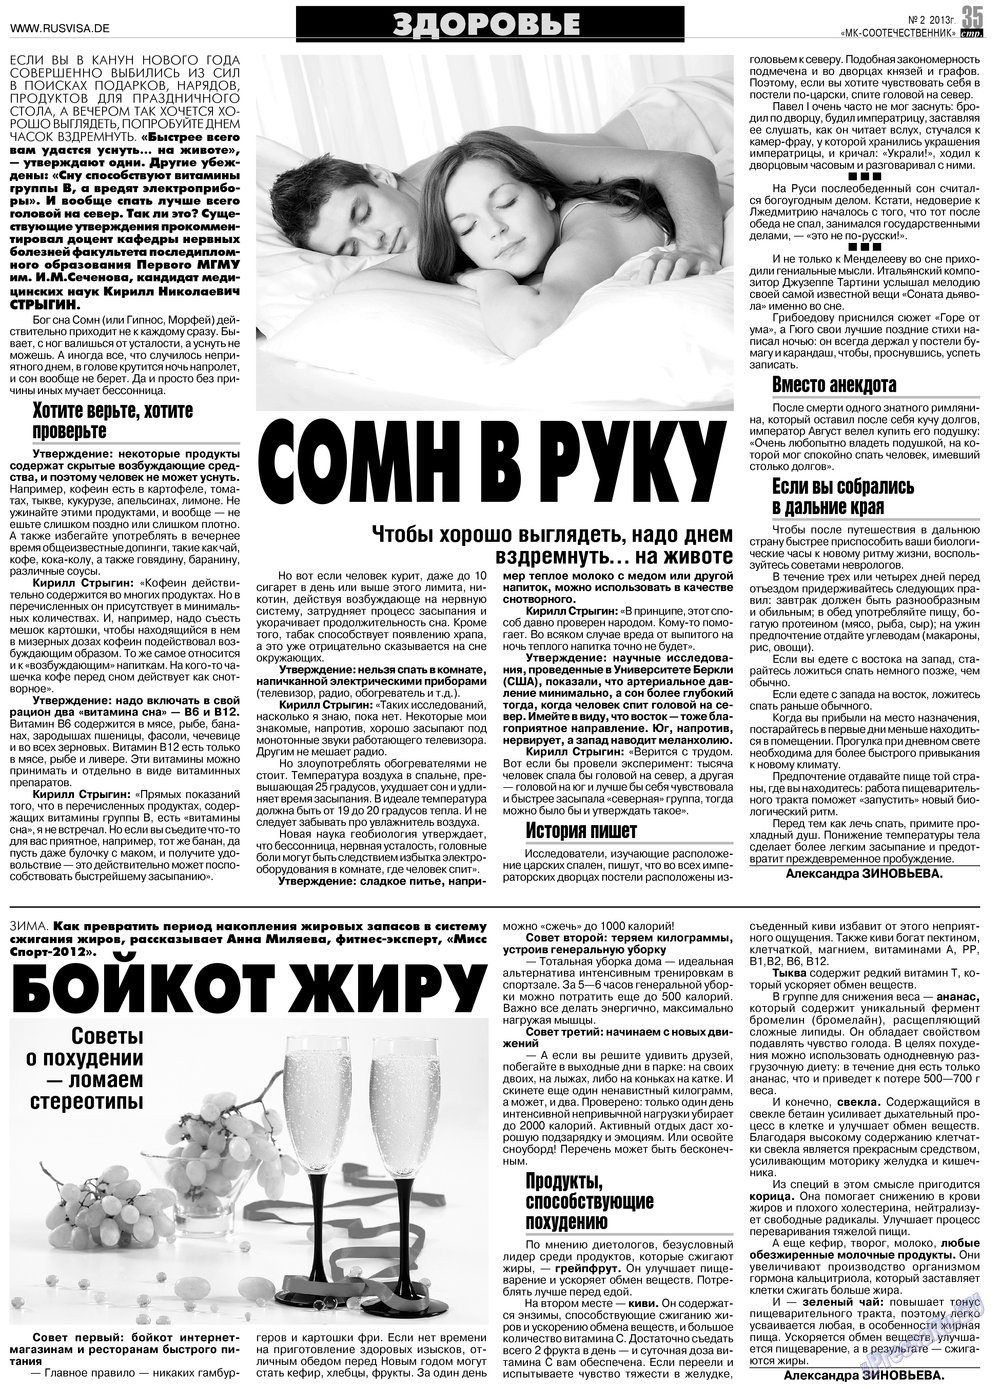 МК-Германия планета мнений, газета. 2013 №2 стр.35